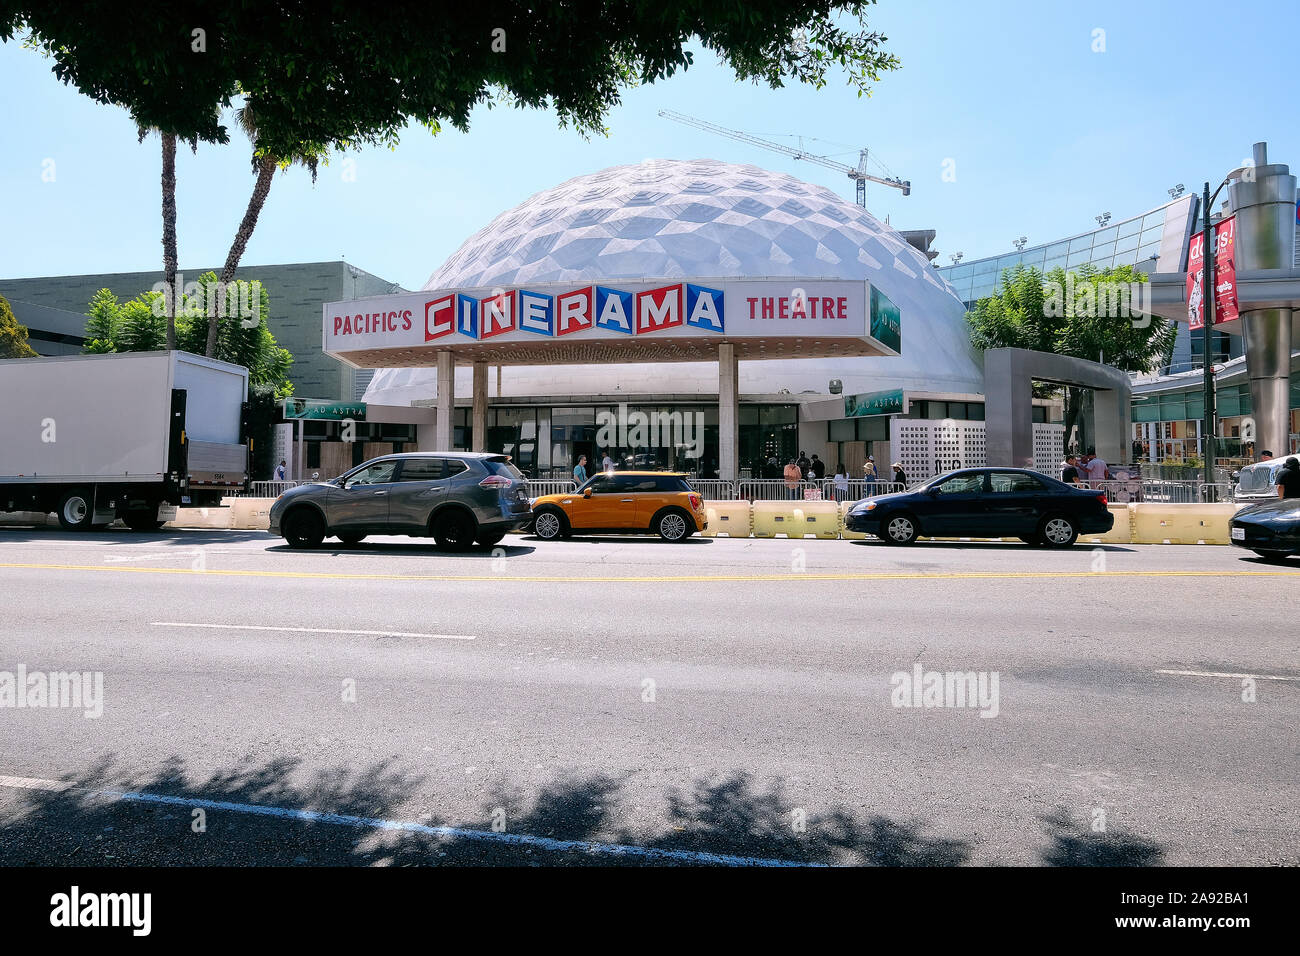 Pacific´s Cinerama Theatre, legendary movie theatre on Sunset Boulevard, Hollywood, Los Angeles, California, USA Stock Photo